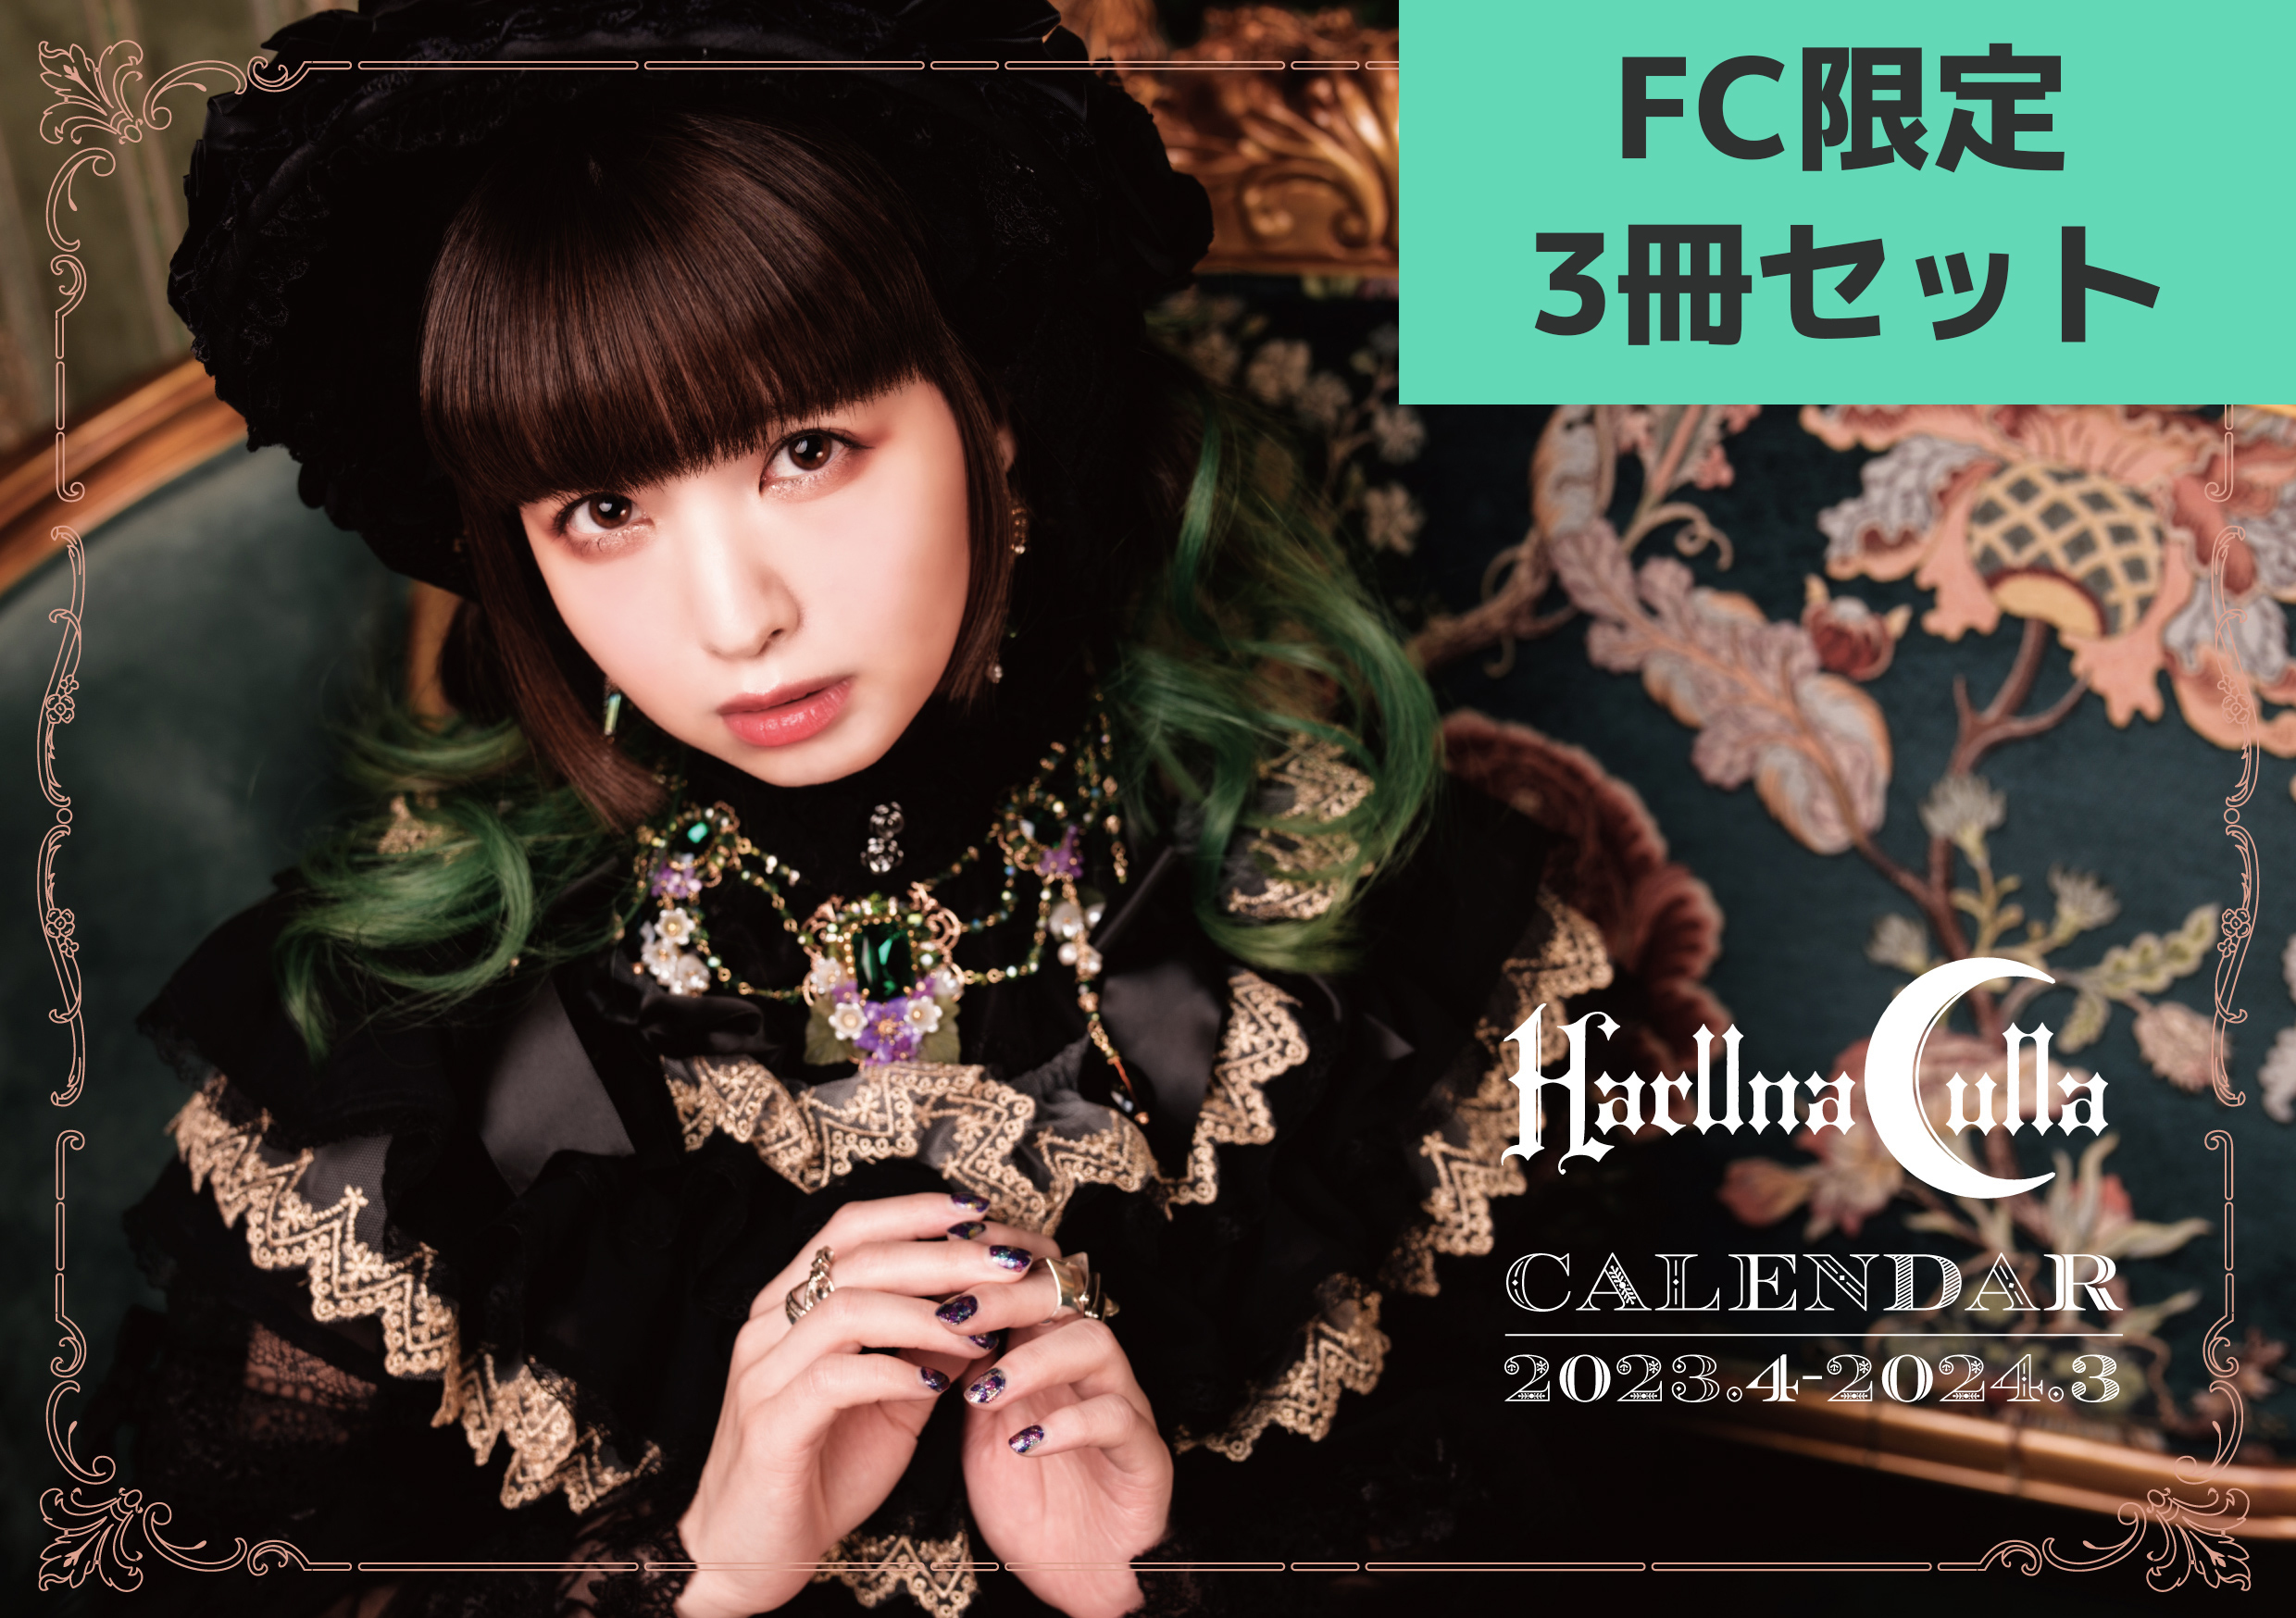 【FC限定3冊セット】春奈るなカレンダー 2023.04-2024.03